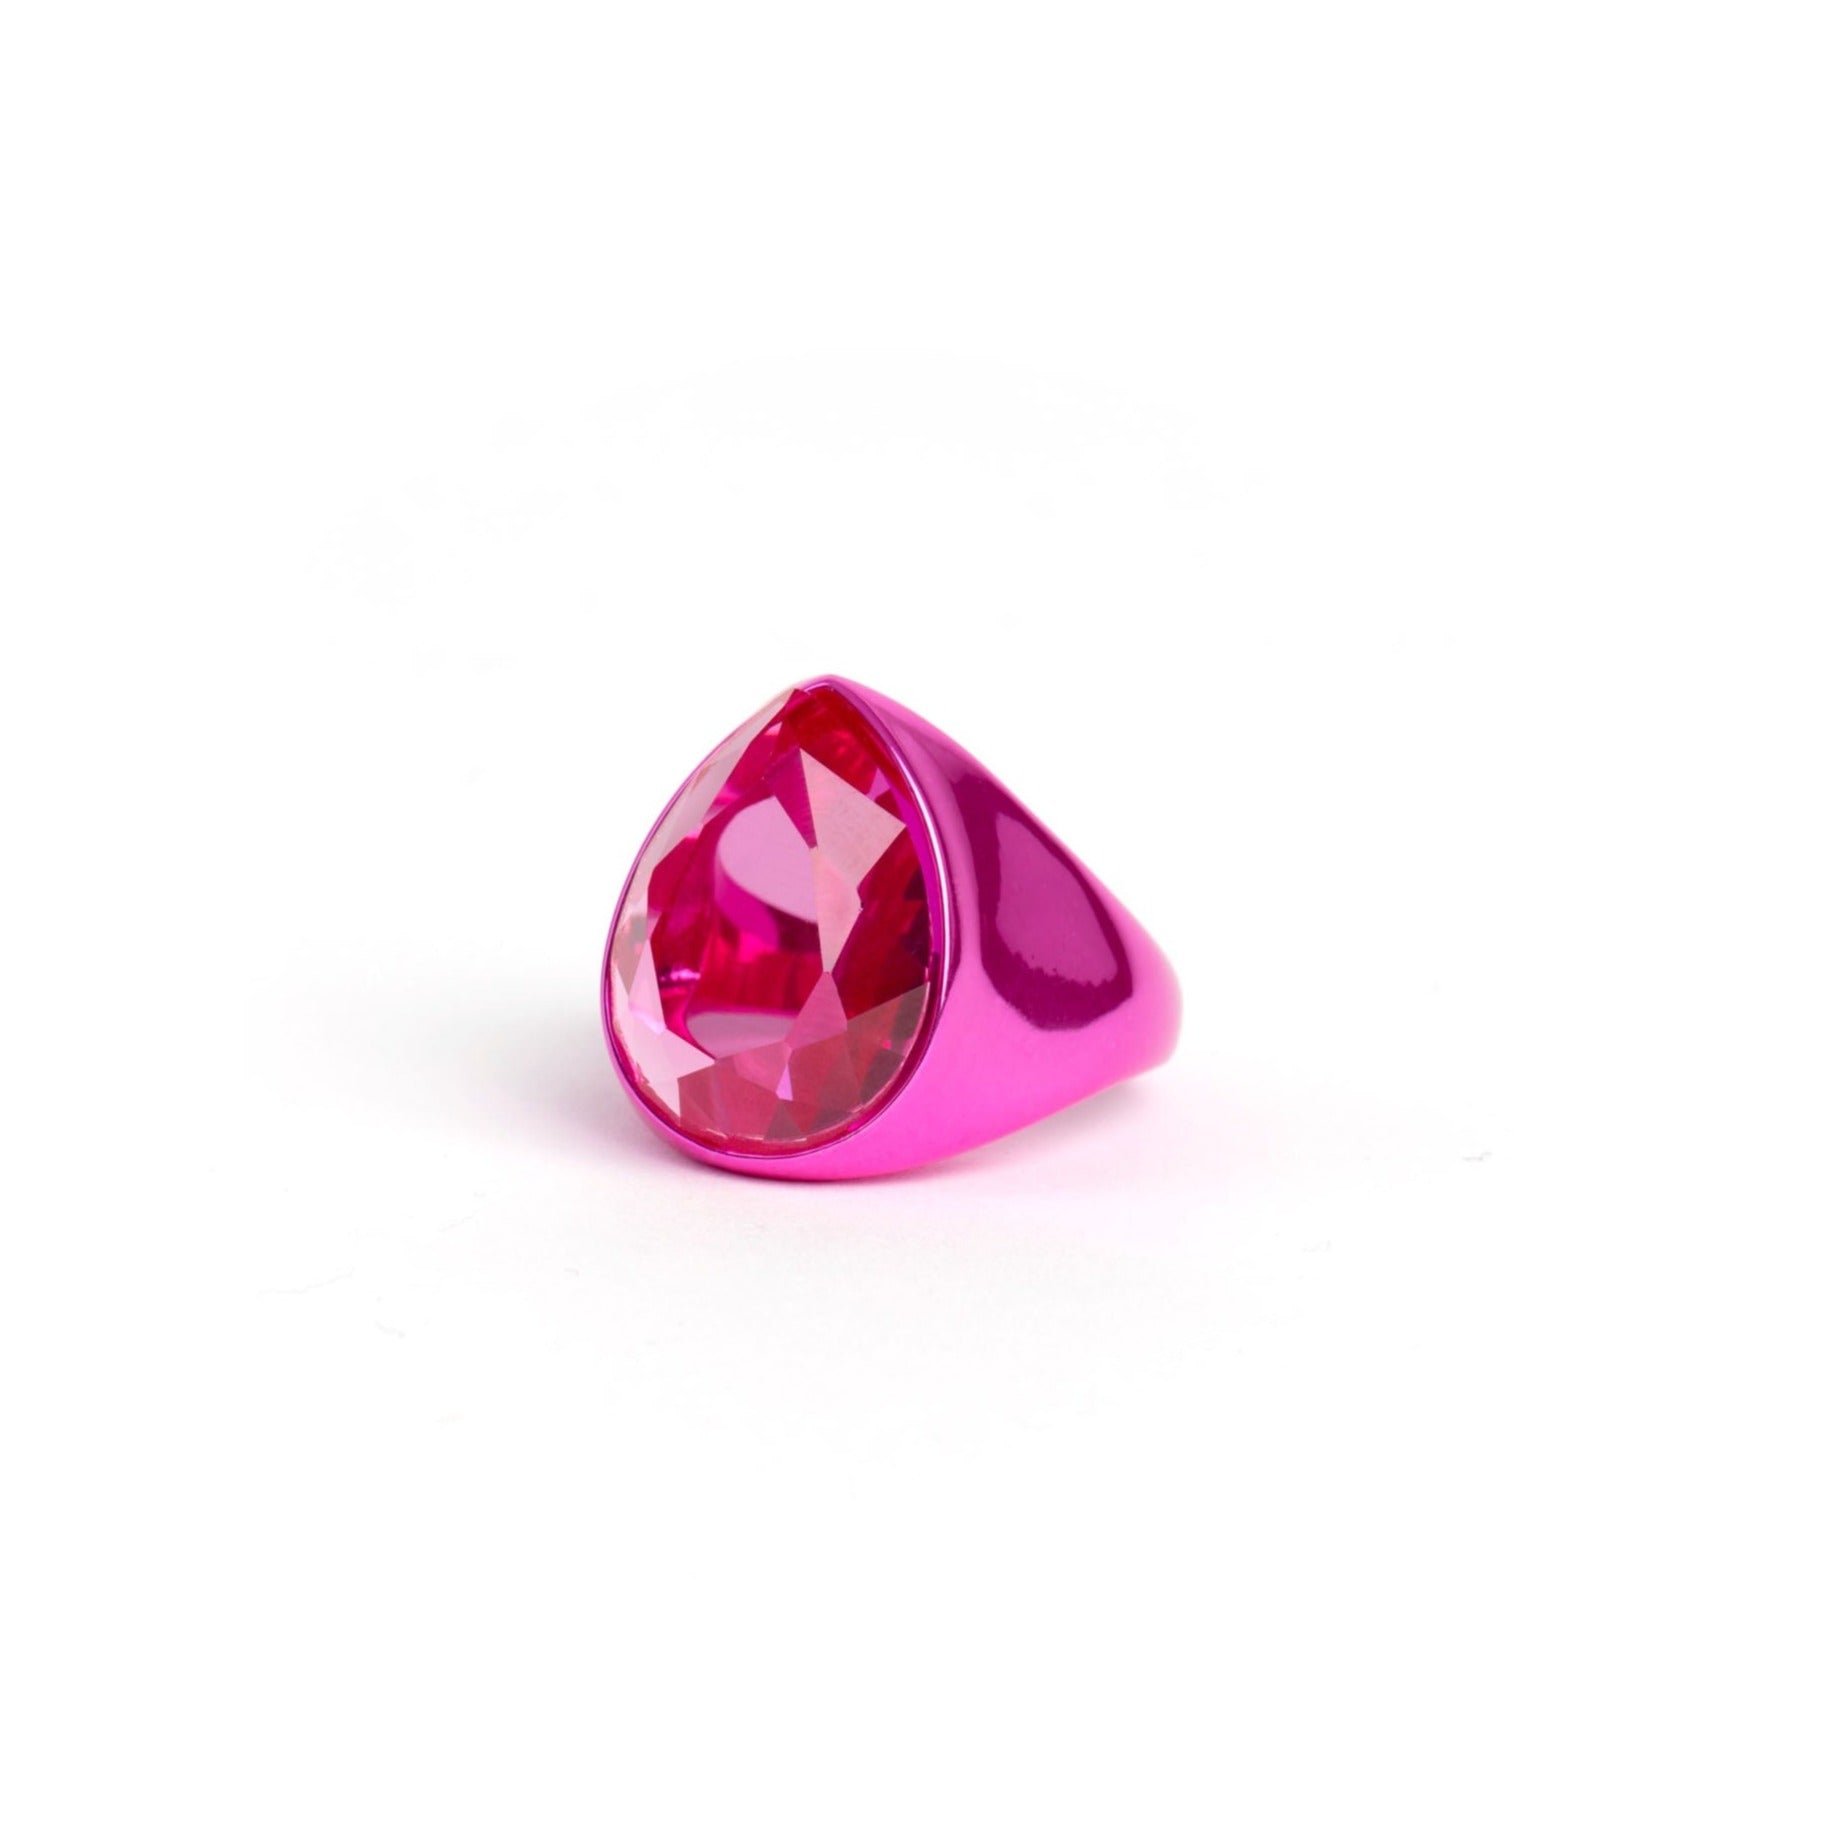 Pear Halo Aquamarine & Diamond Engagement Ring Set 14K Rose Gold 0.33ct  Diamond Frame